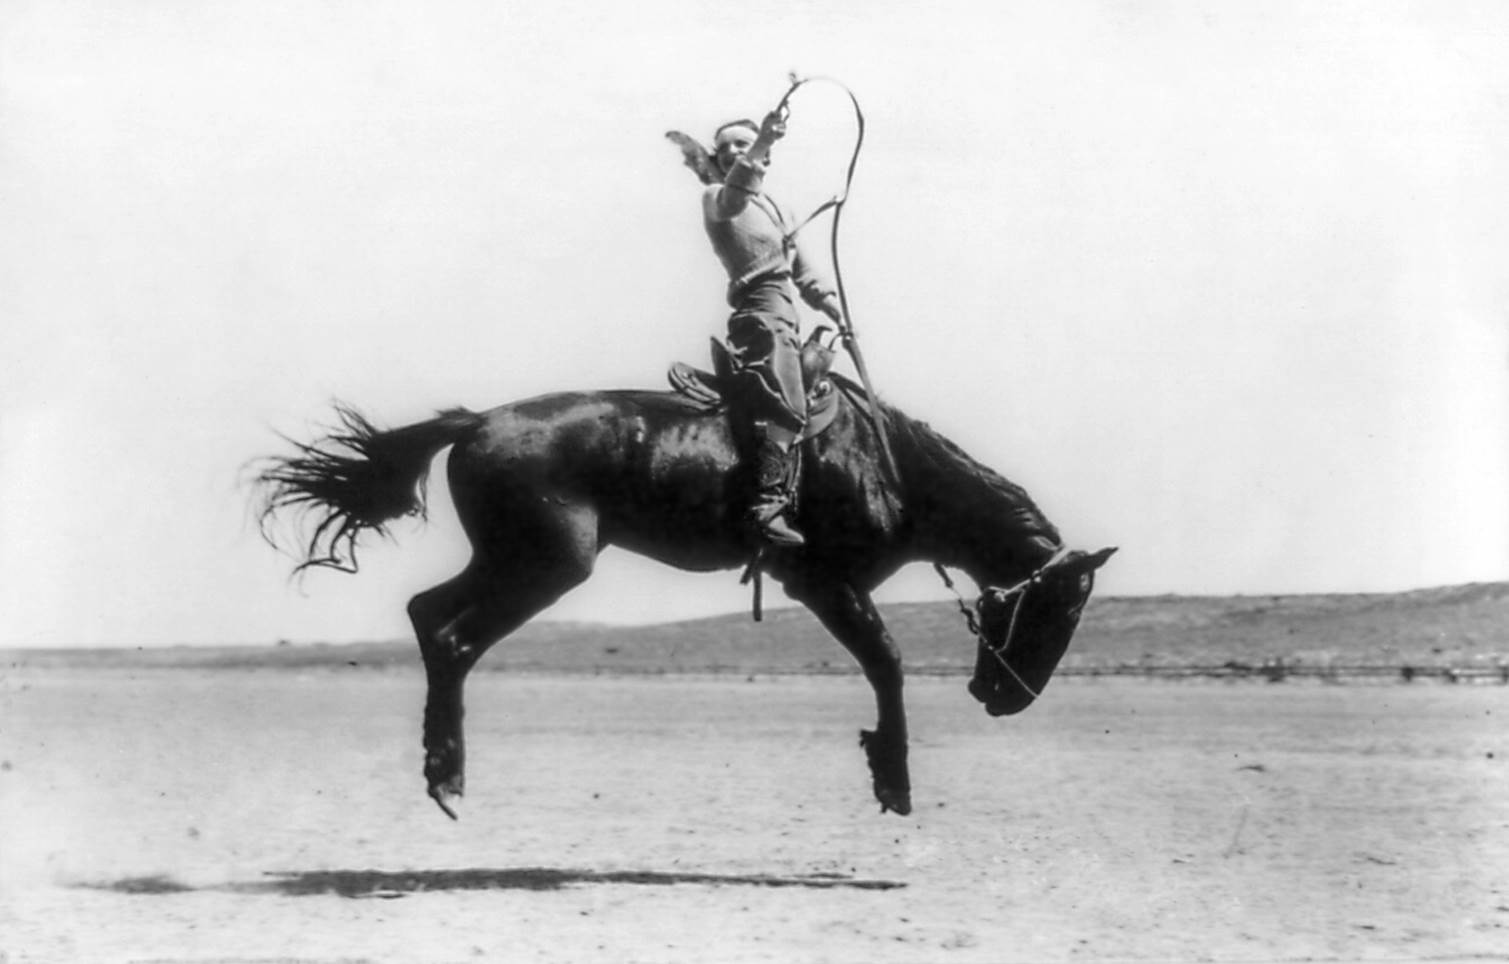 Cowgirls and Ranch Women: Pioneers Pushing Gender Boundaries